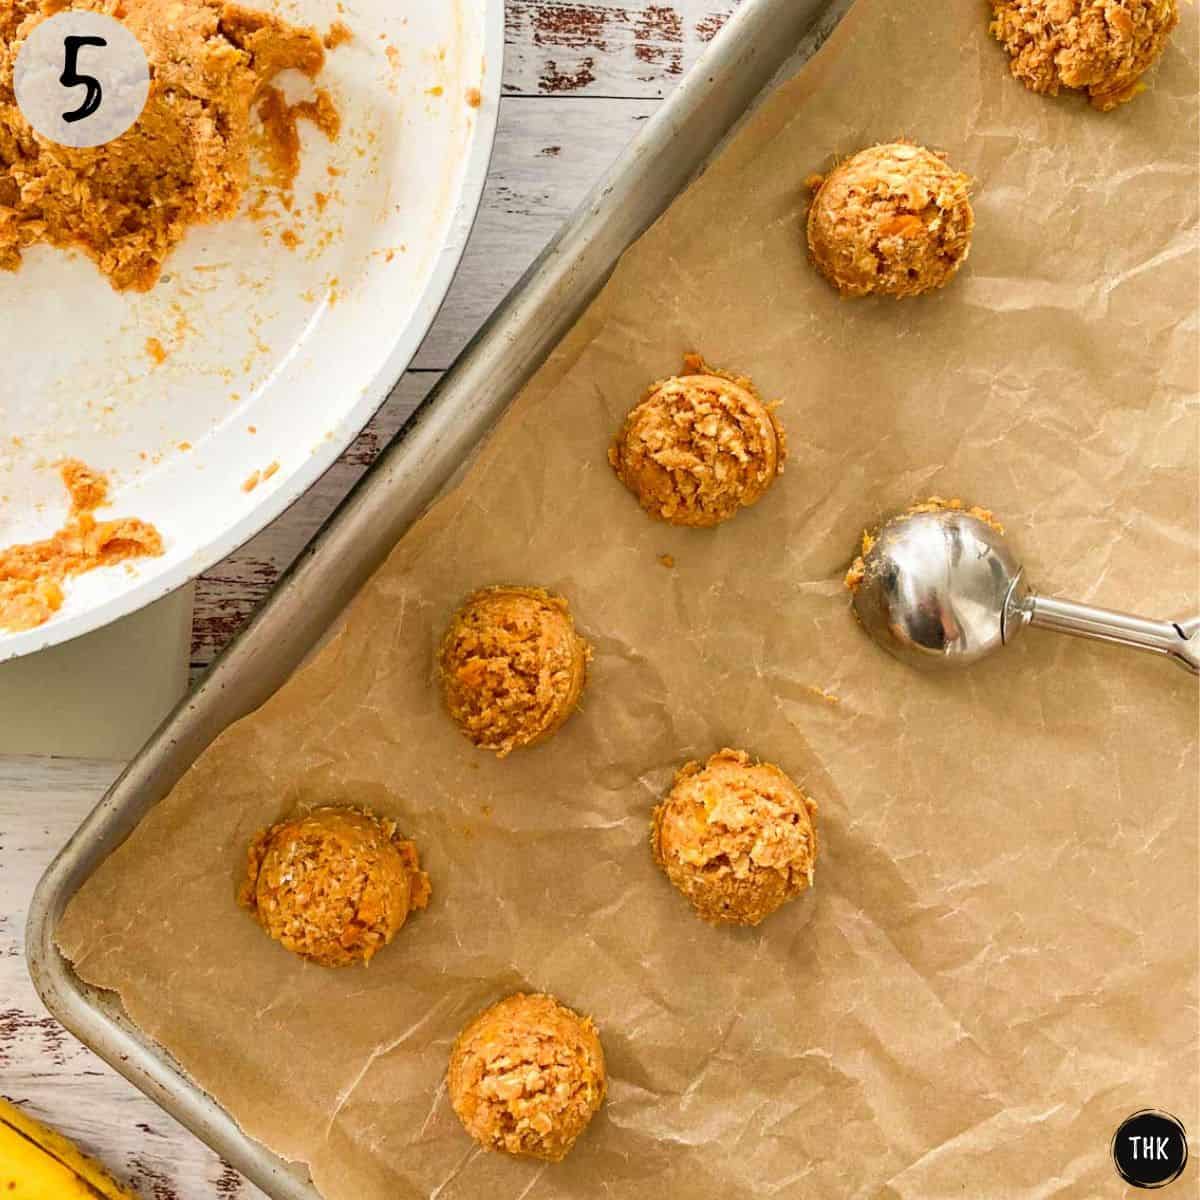 Cookie scoop placing balls of cookie dough on baking sheet.